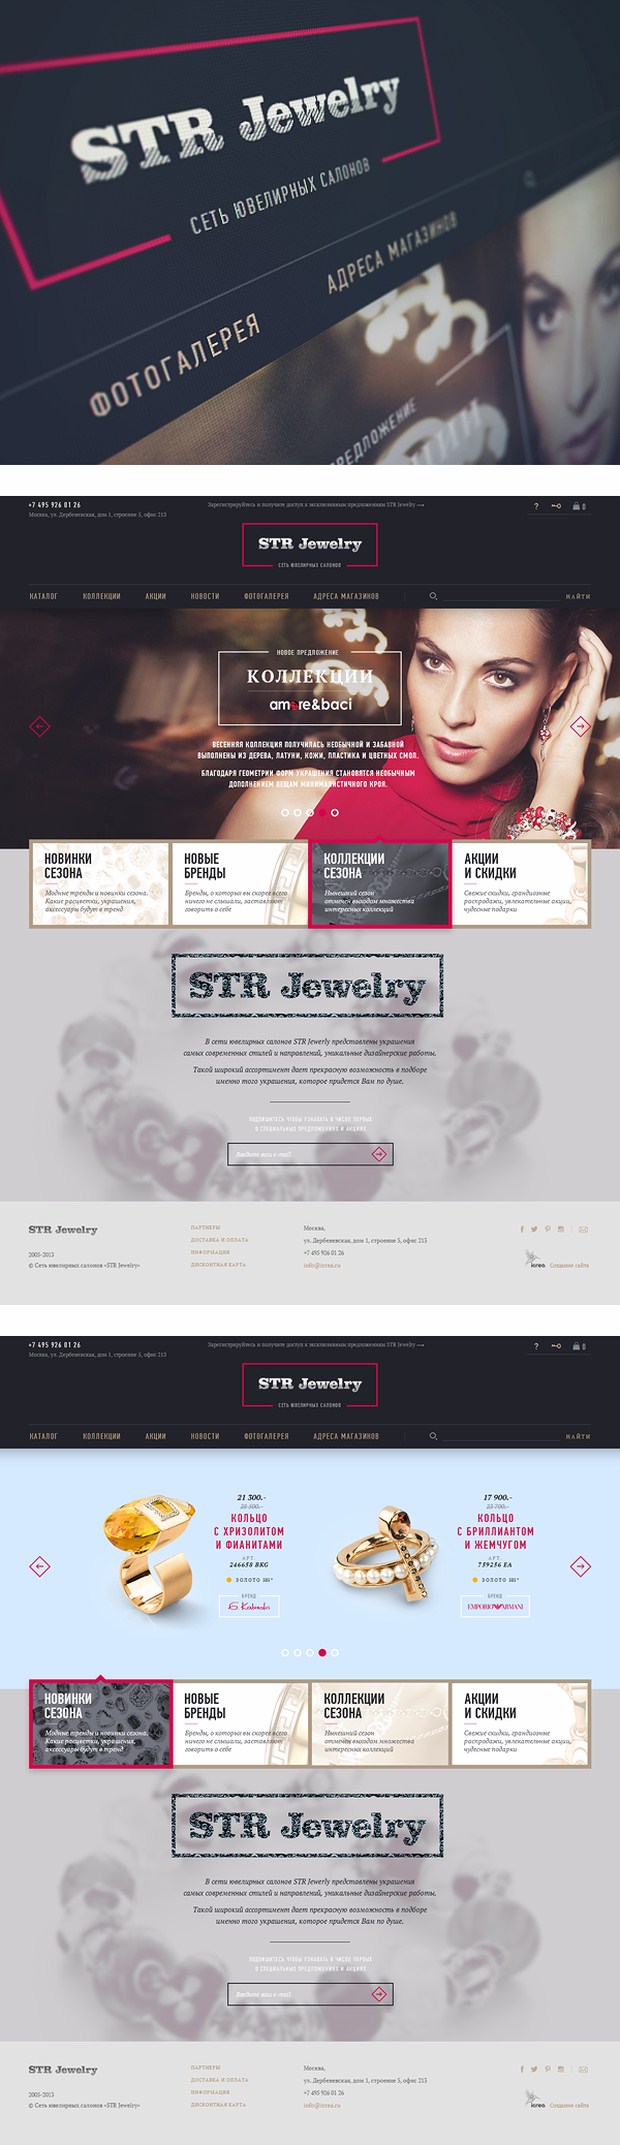 STR Jewelry web design inspiration